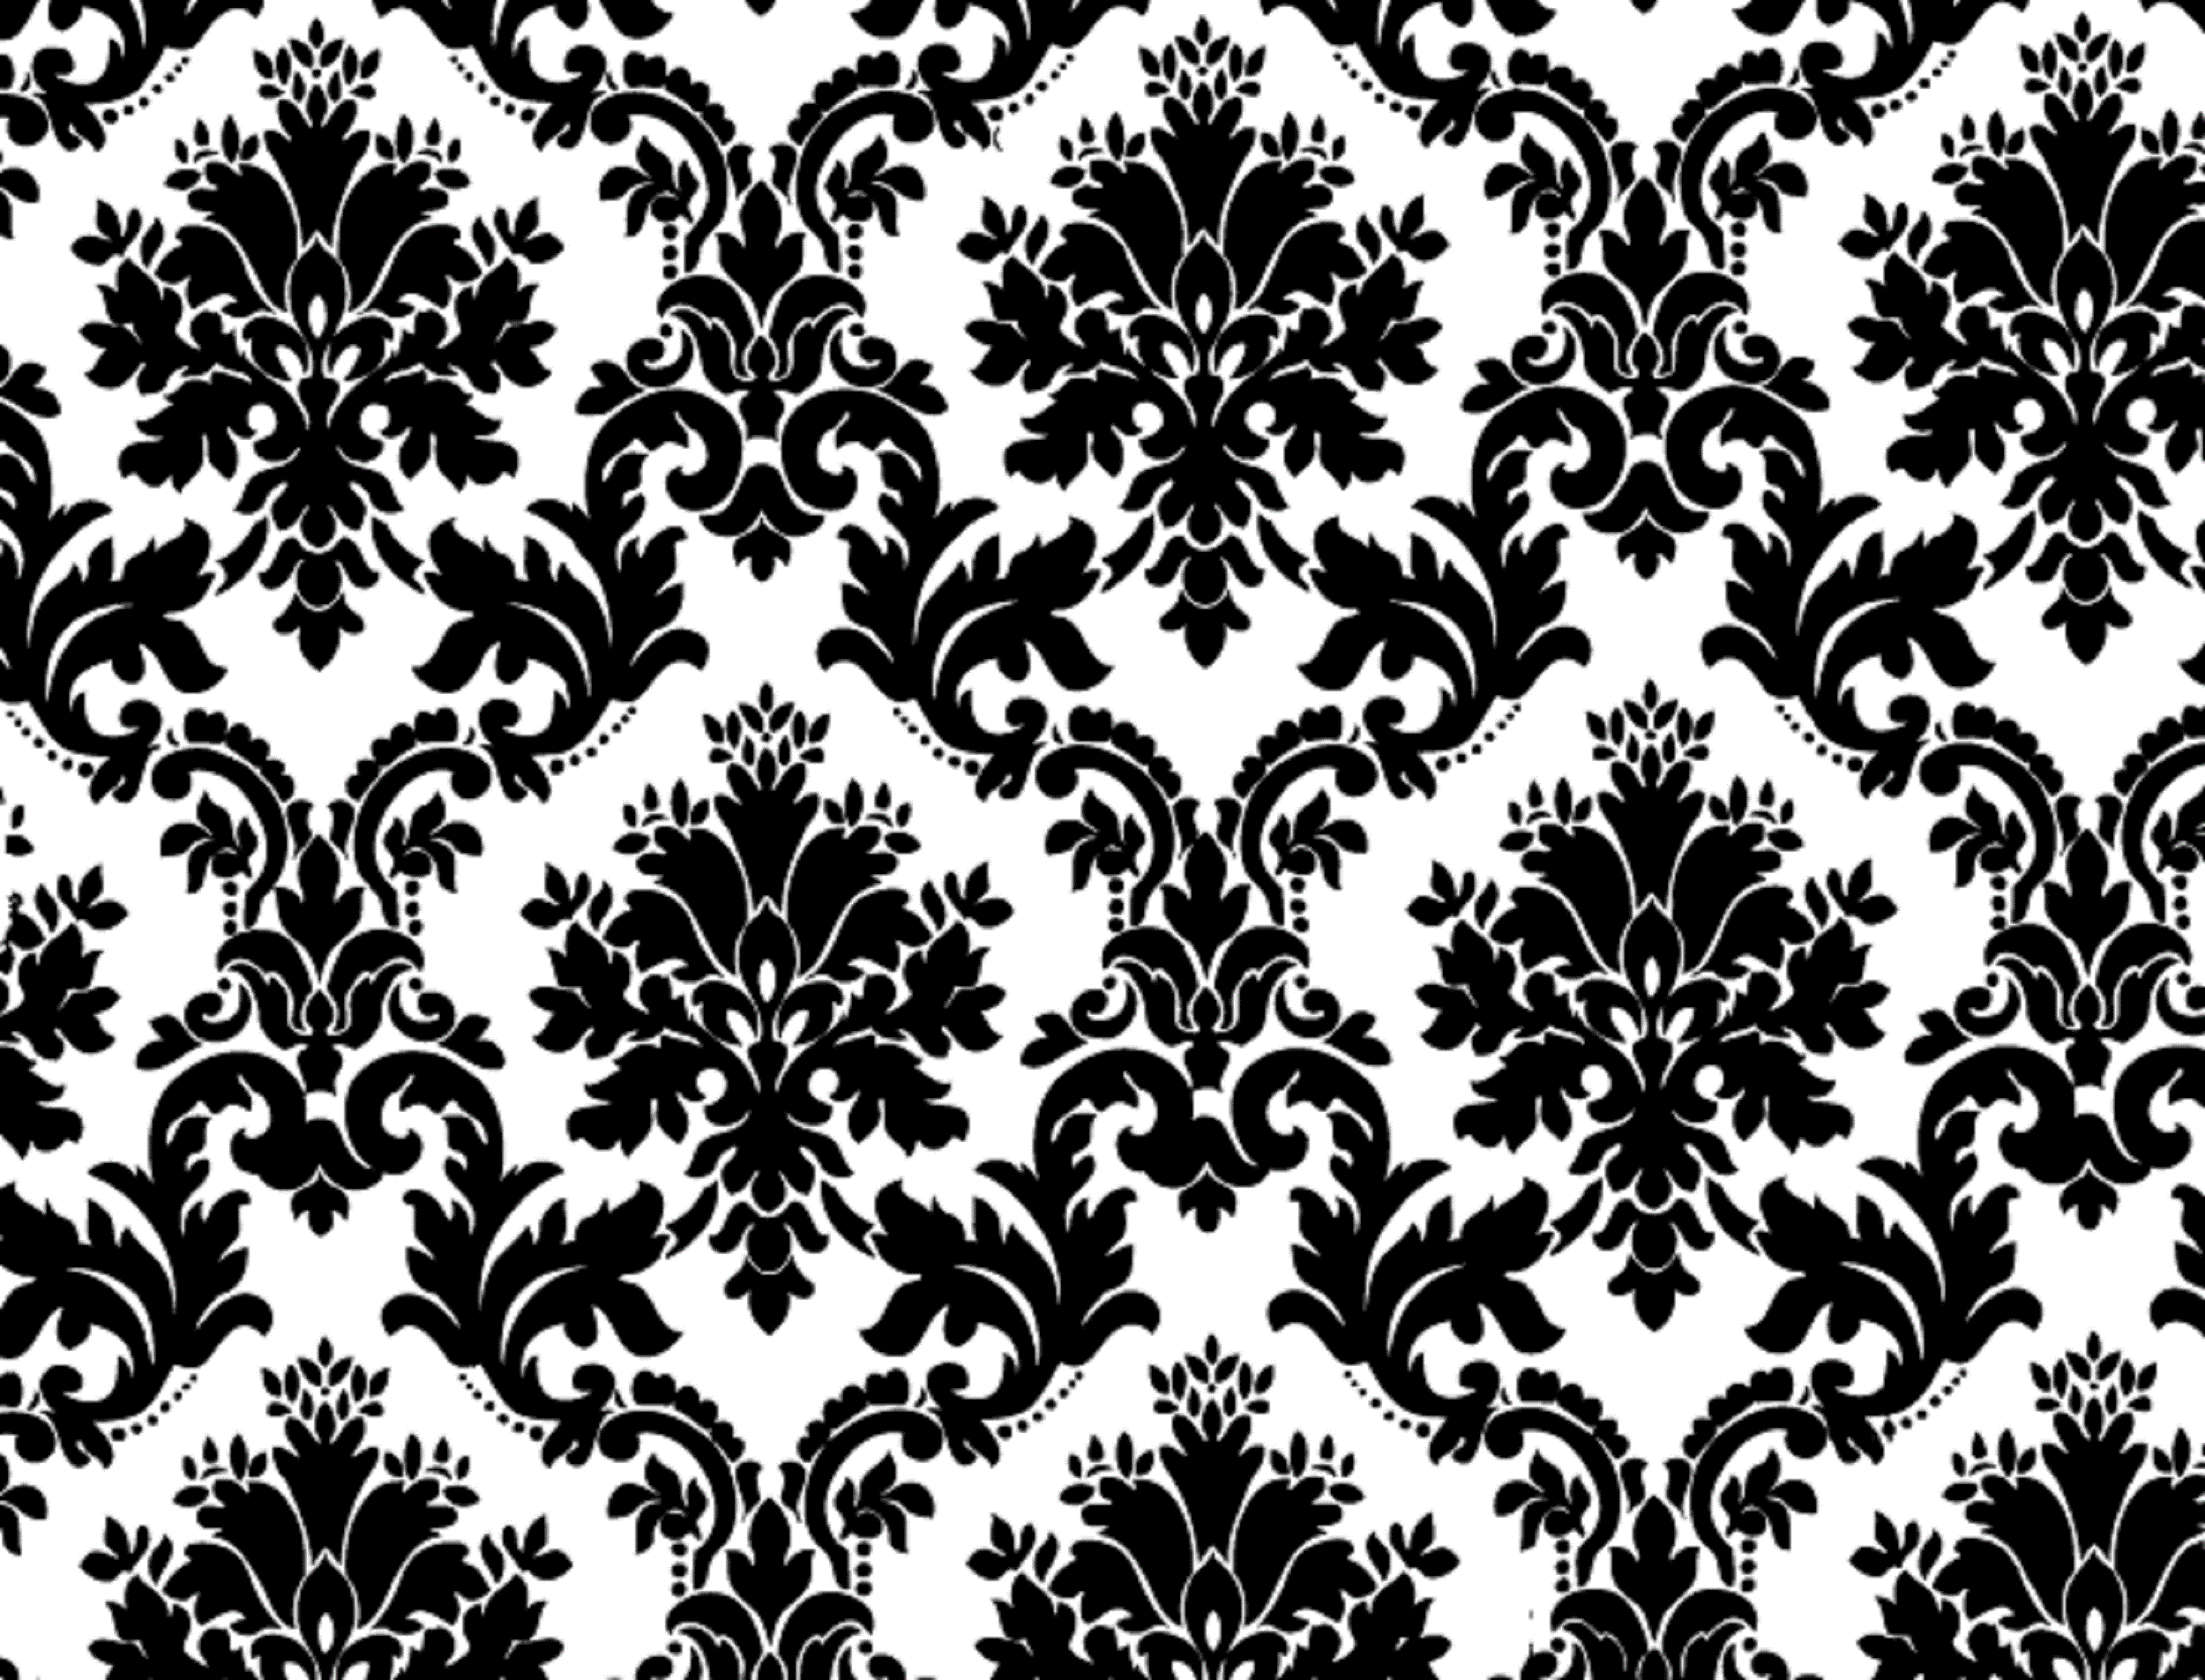 Black and white wallpaper designs vector design black and white